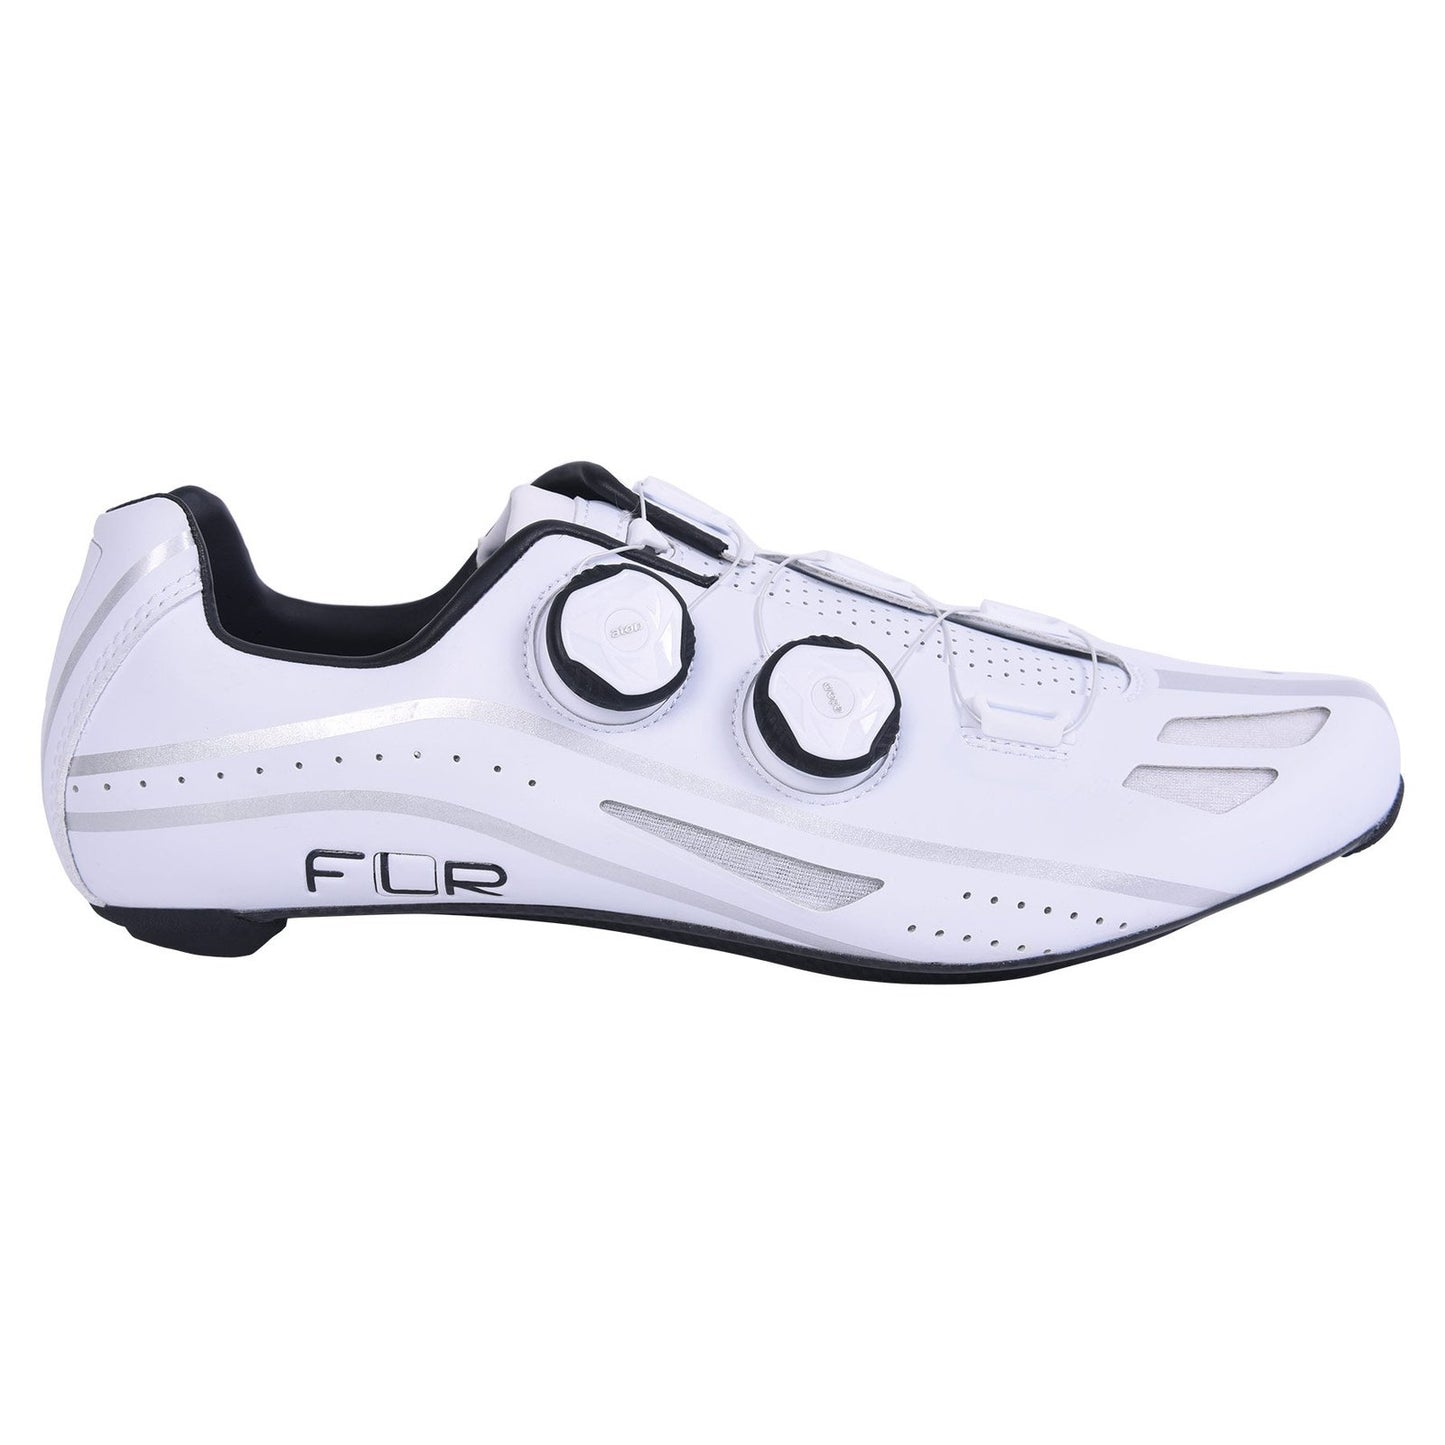 Flr F-XX II Carbon Road Shoe White - 40